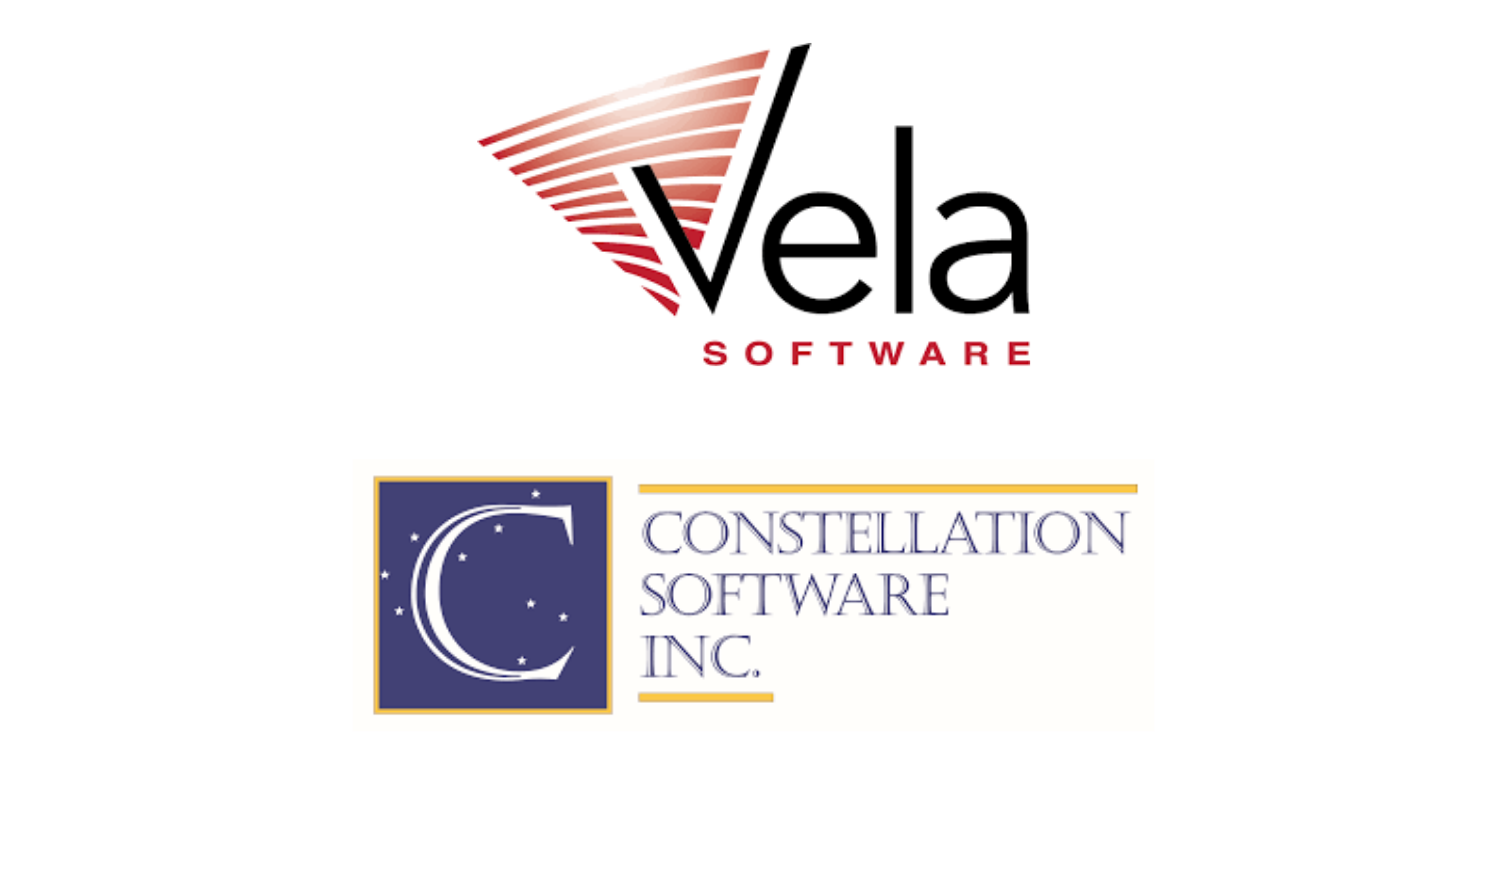 Vela Software & Constellation Software Logo